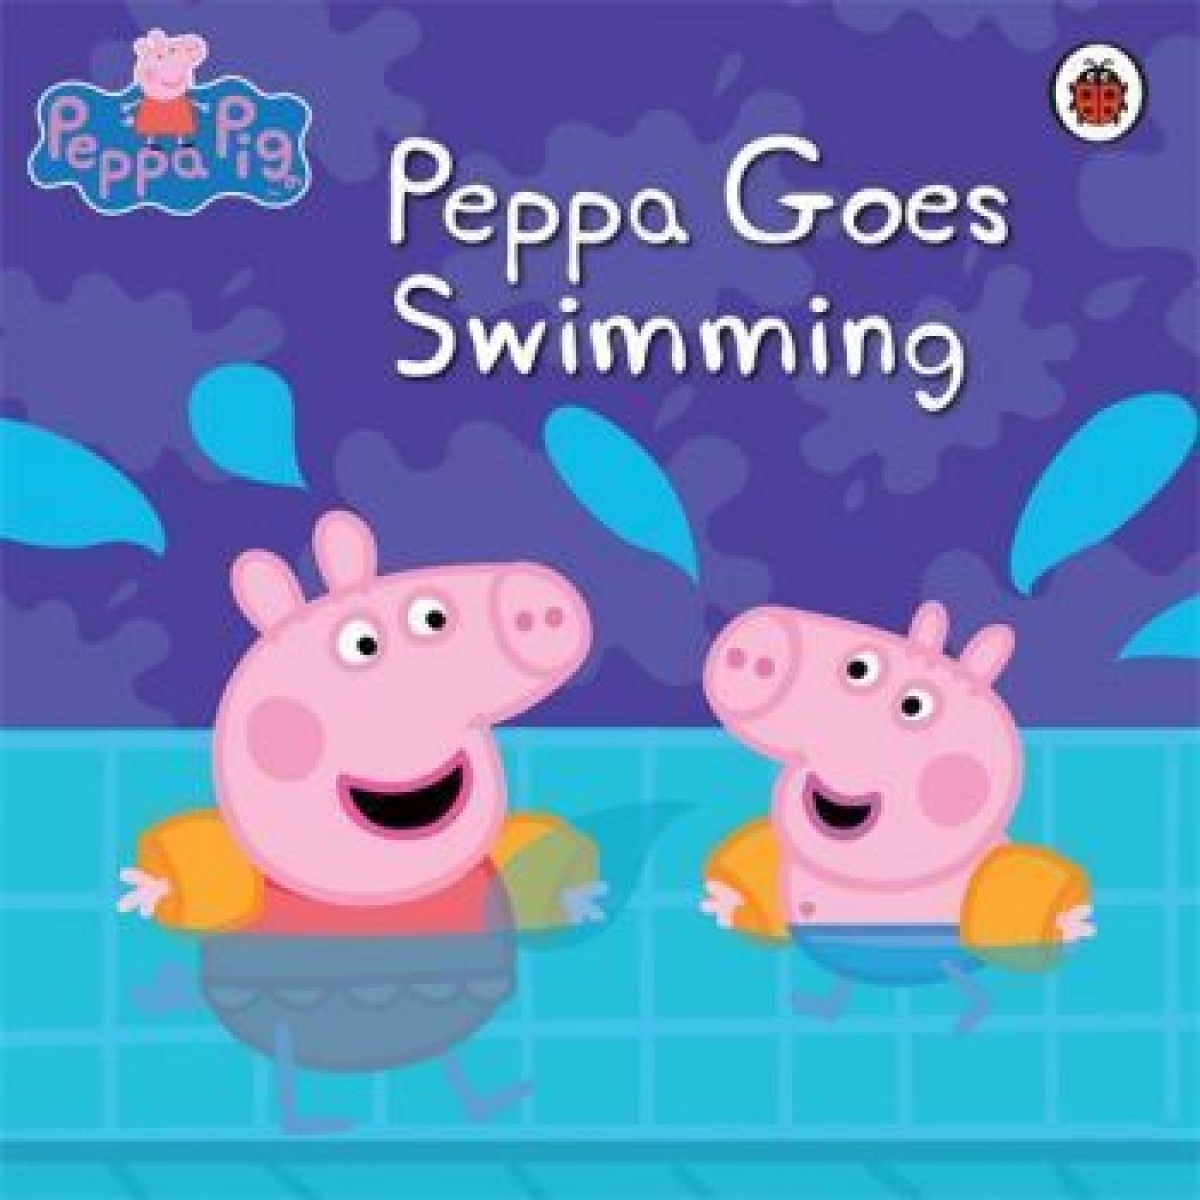 Ladybird PEPPA PIG: Peppa Goes Swimming 